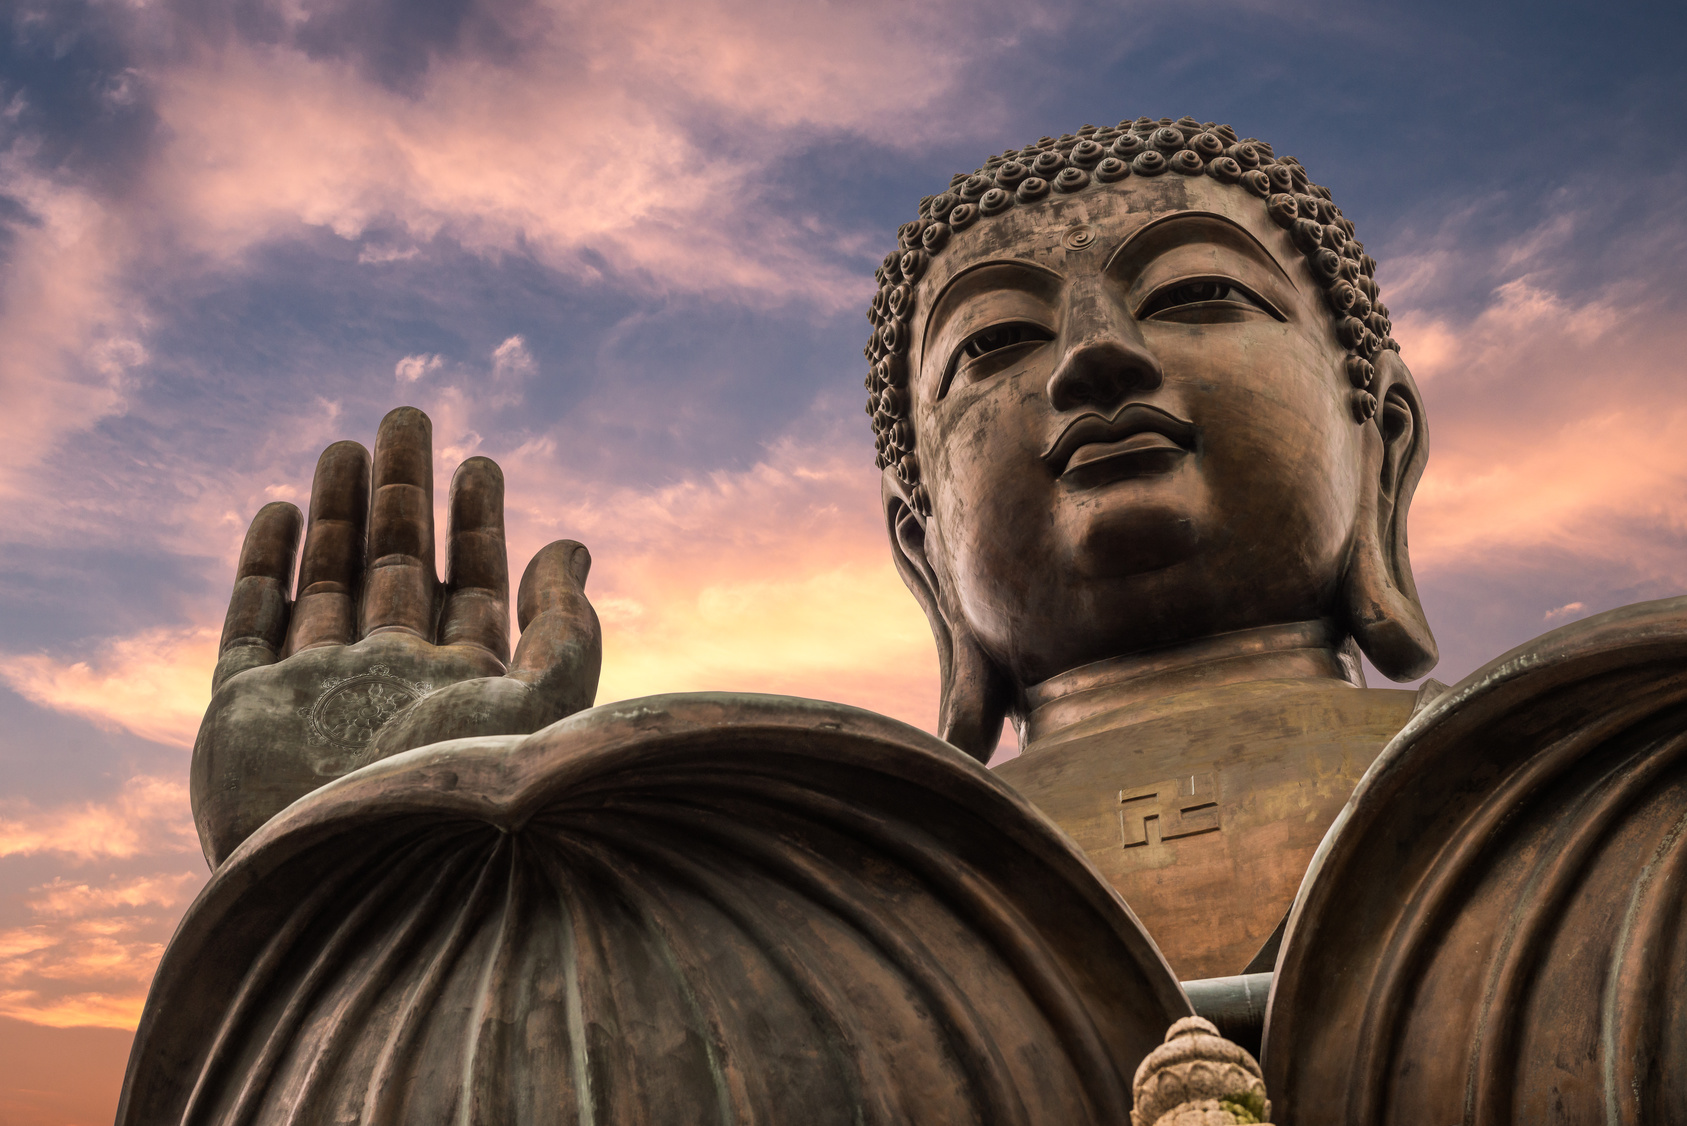 The enormous Tian Tan Buddha at Po Lin Monastery in Hong Kong.